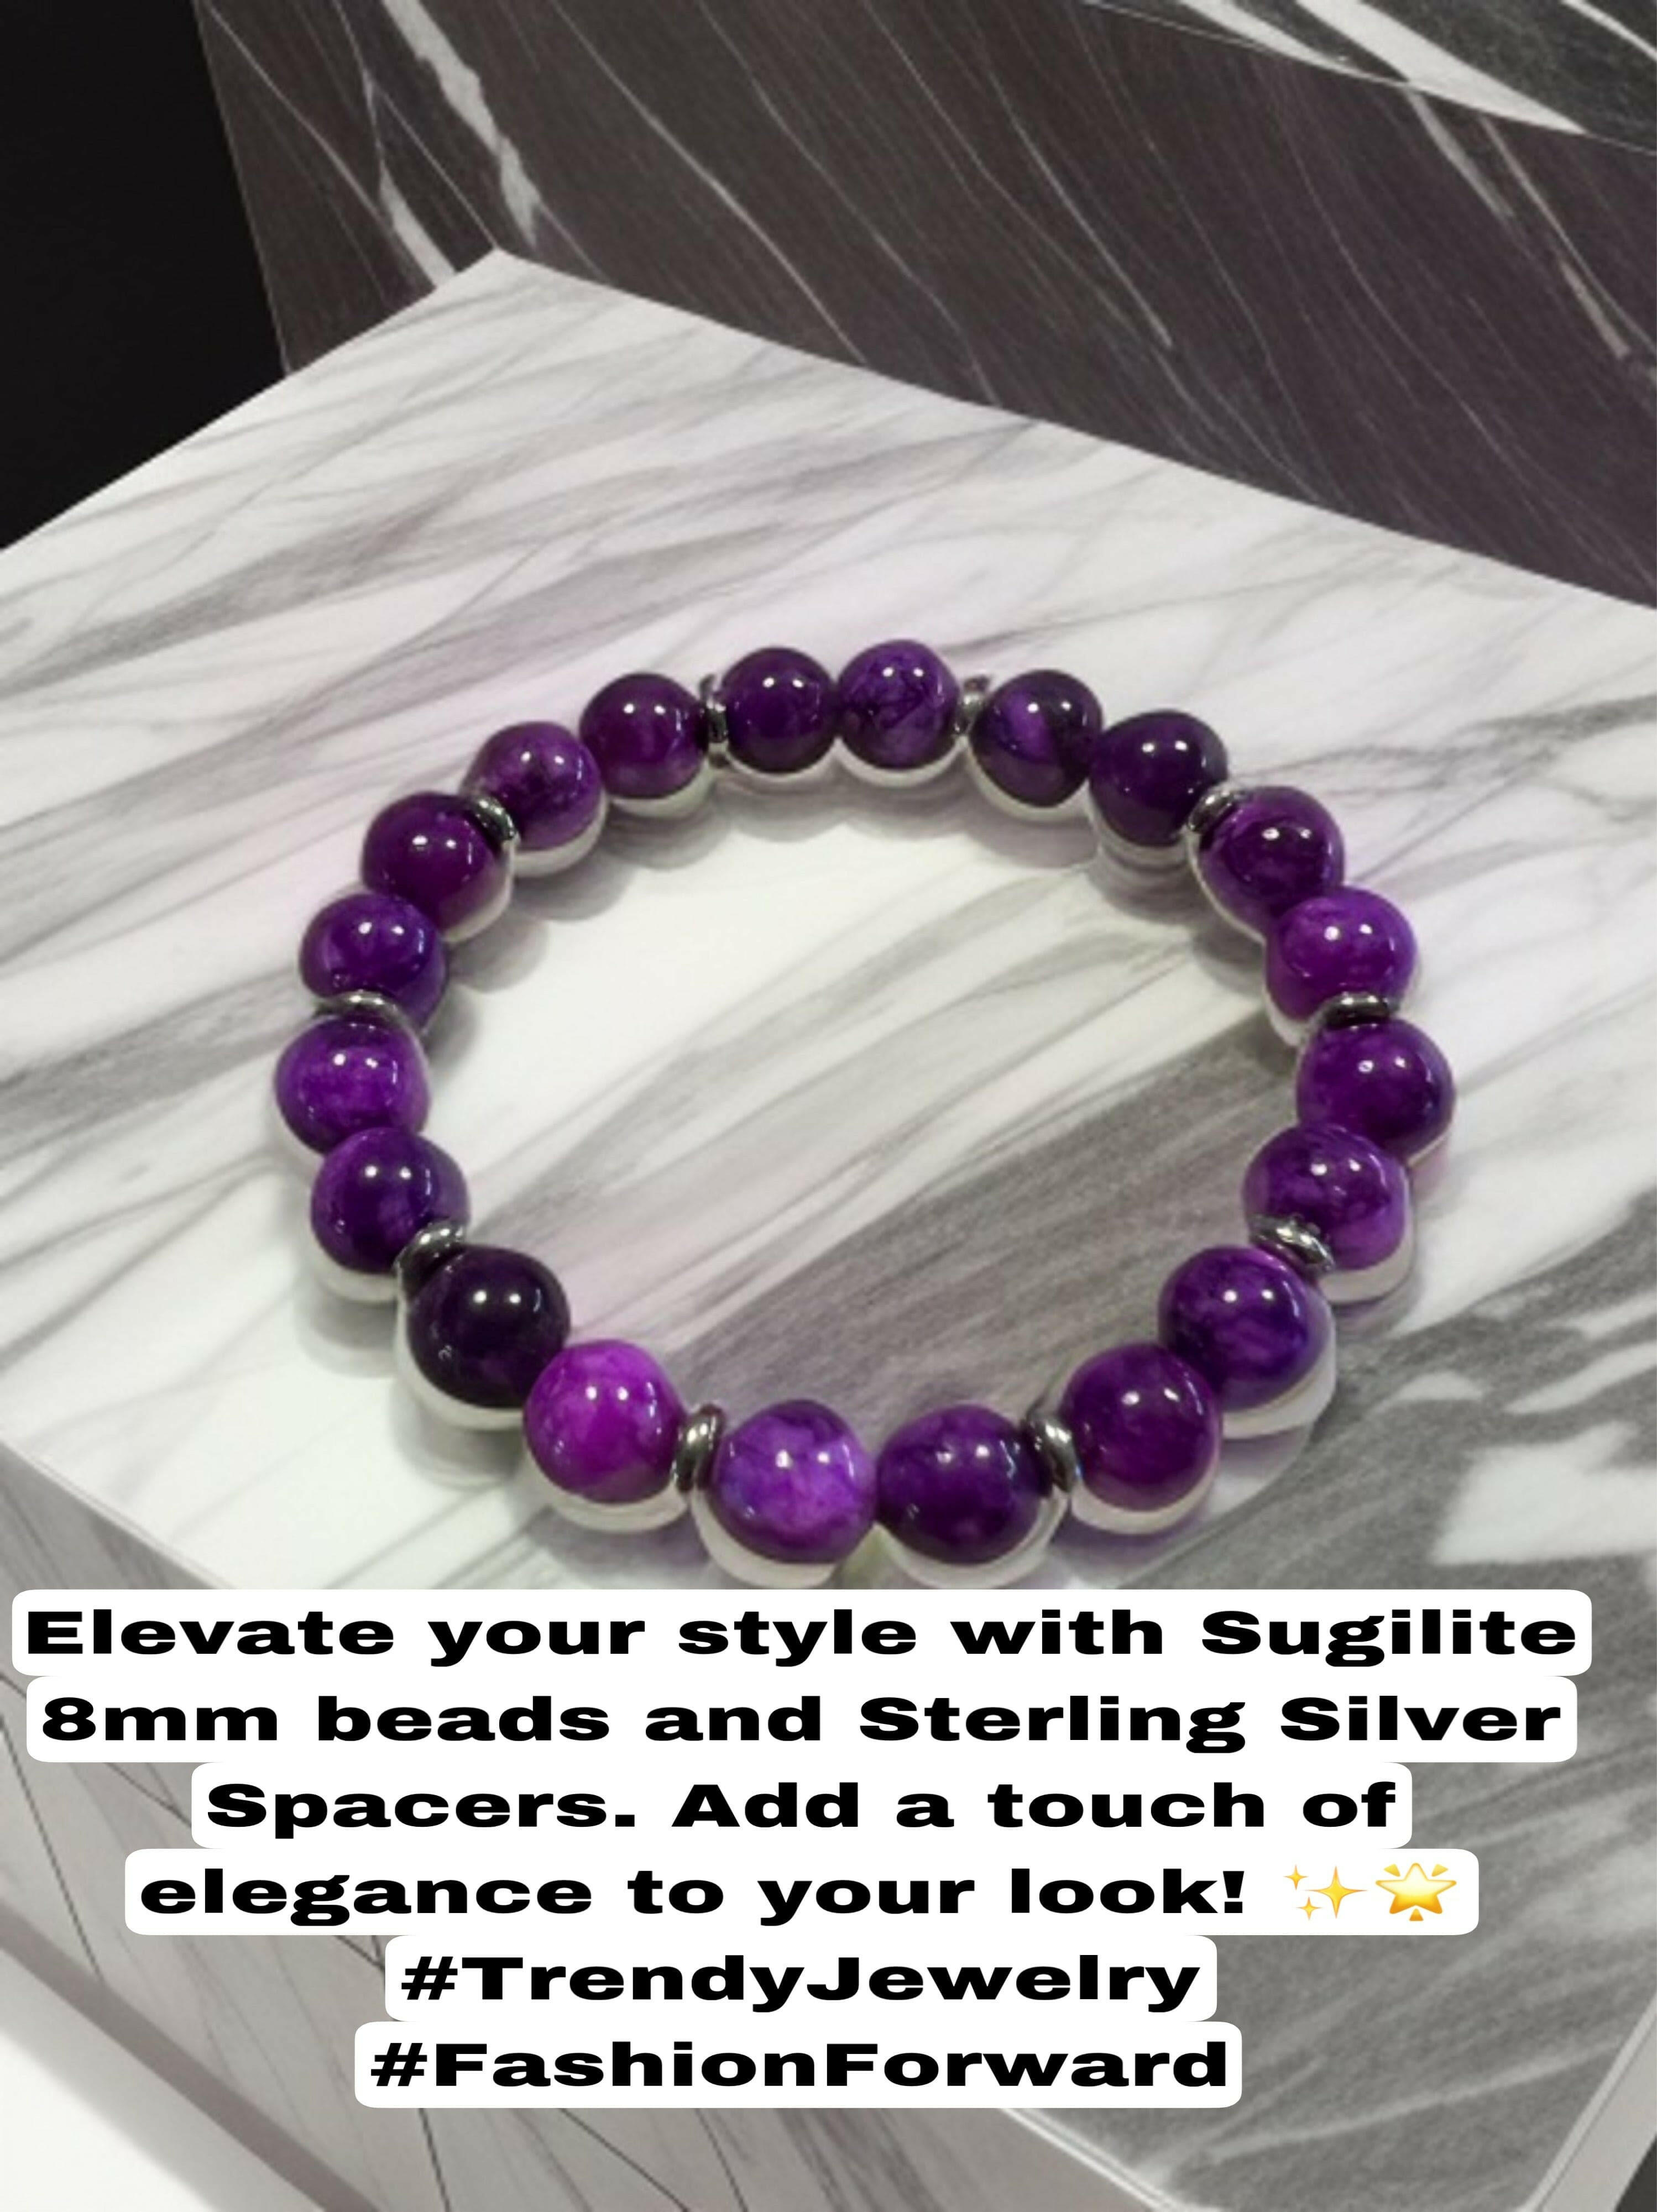 Sugilite crystal - a powerful healing stone for spiritual growth